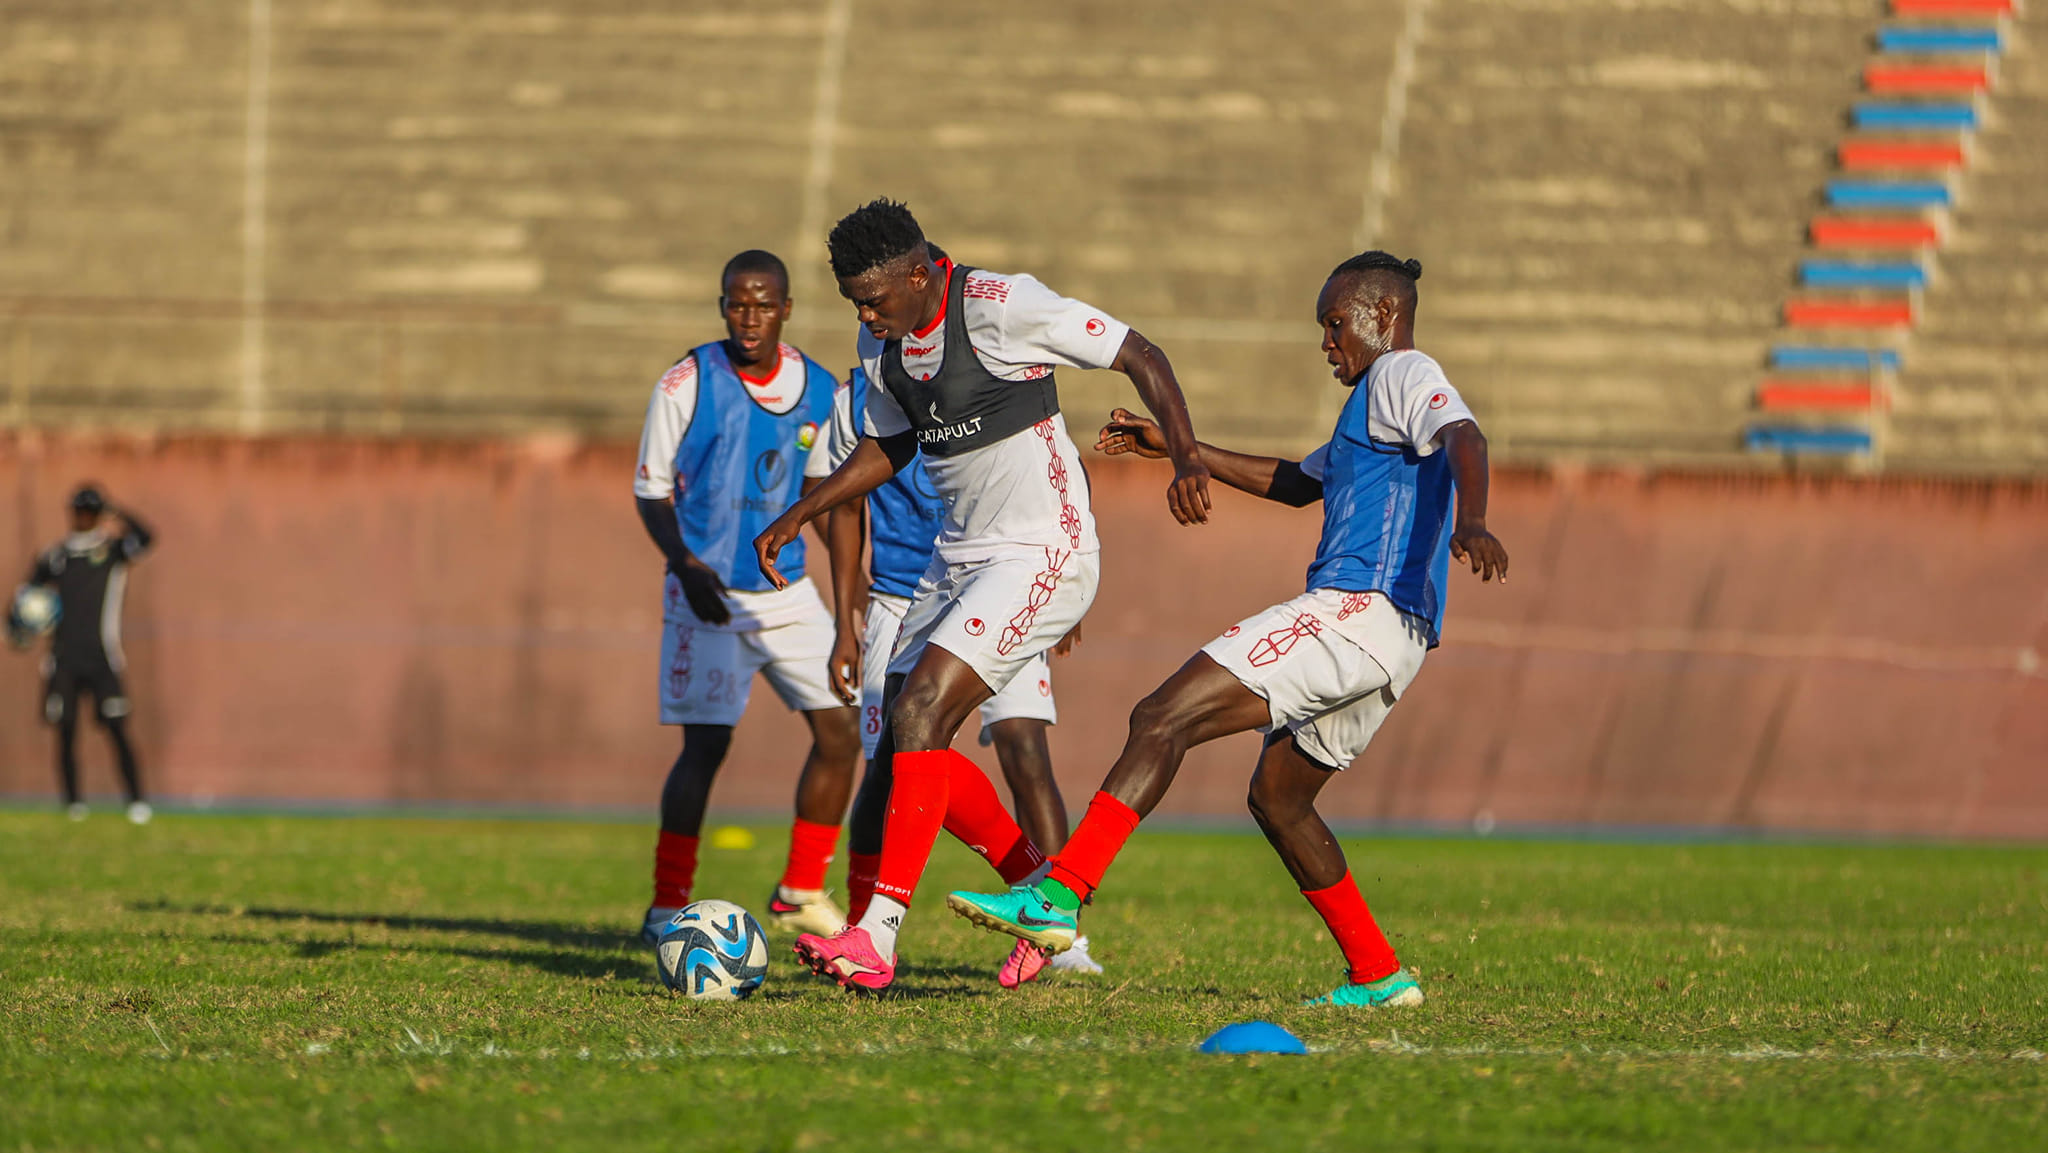 COSAFA CUP: Kenya's Emerging Stars kick off campaign against Zambia